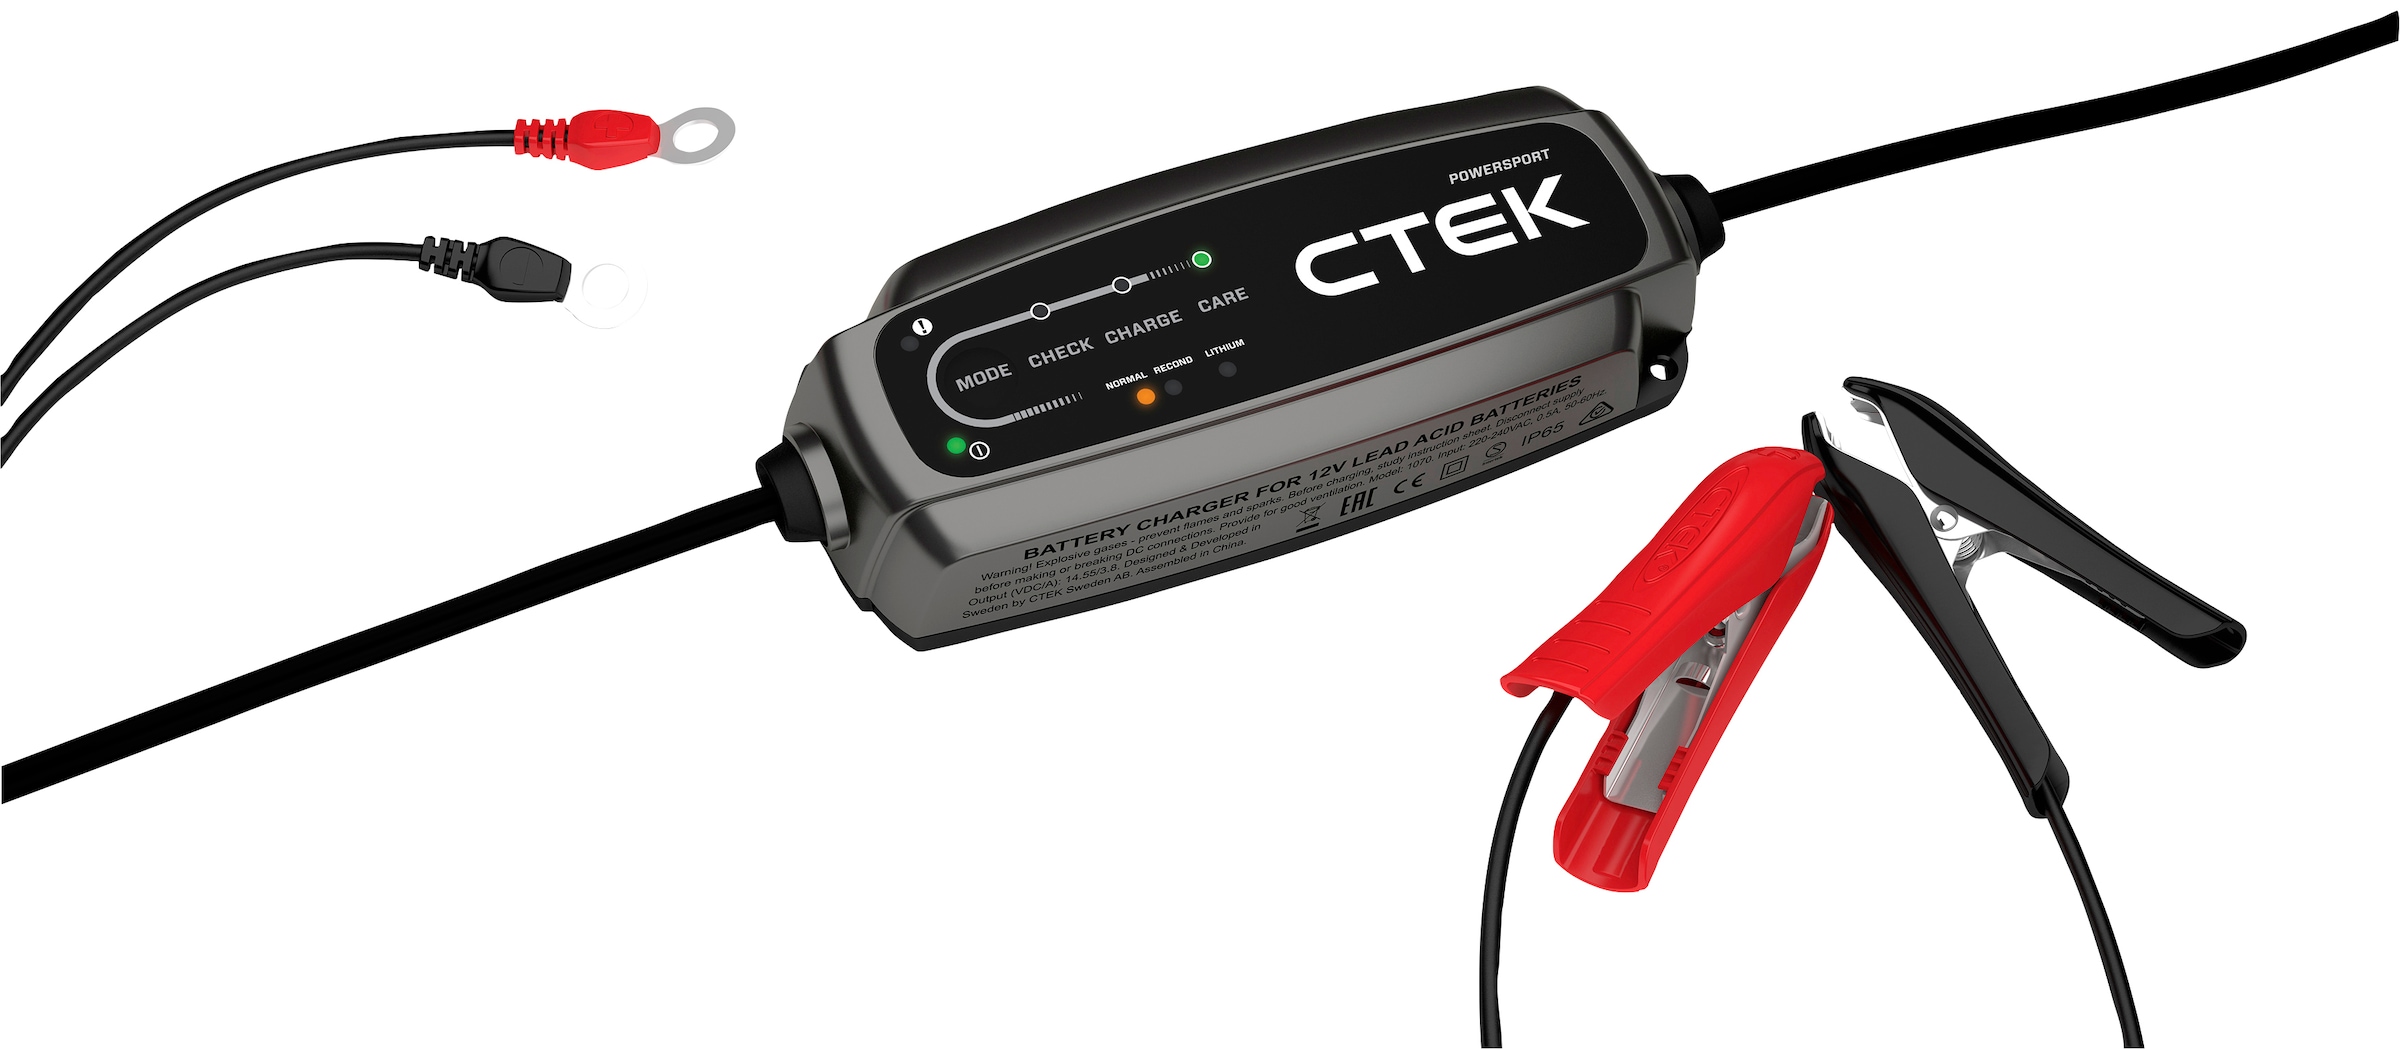 CTEK Batterie-Ladegerät »CT5 Powersport«, für Blei-Säure-Batterien und Lithiumbatterien.